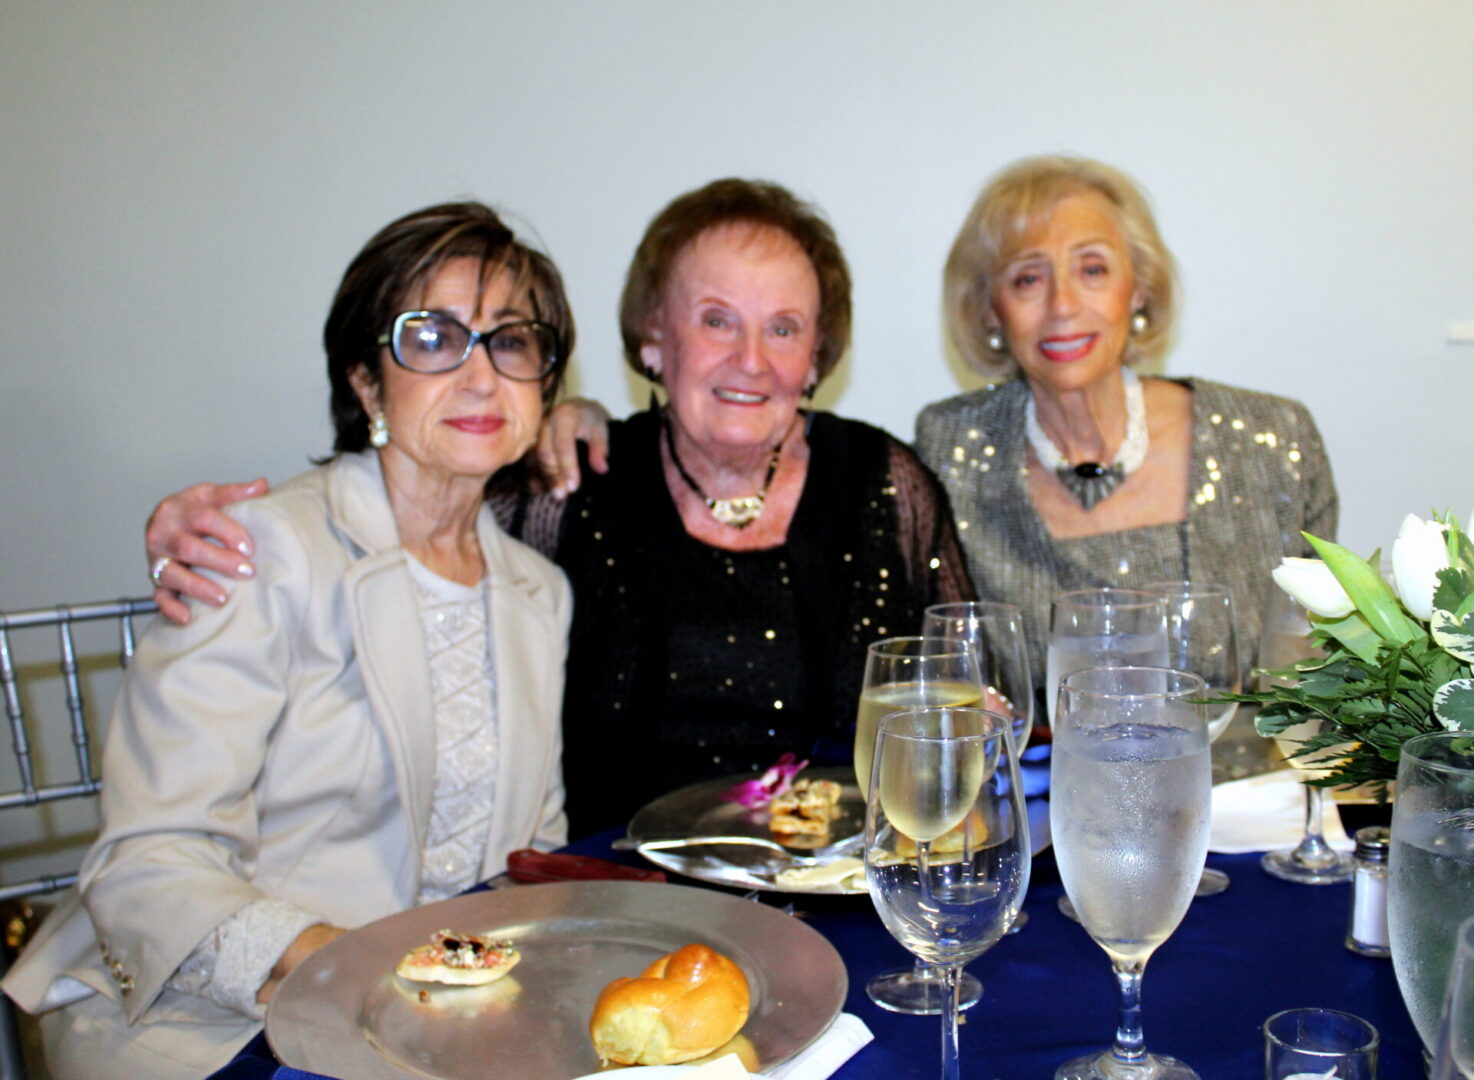 Three women wearing formal attire